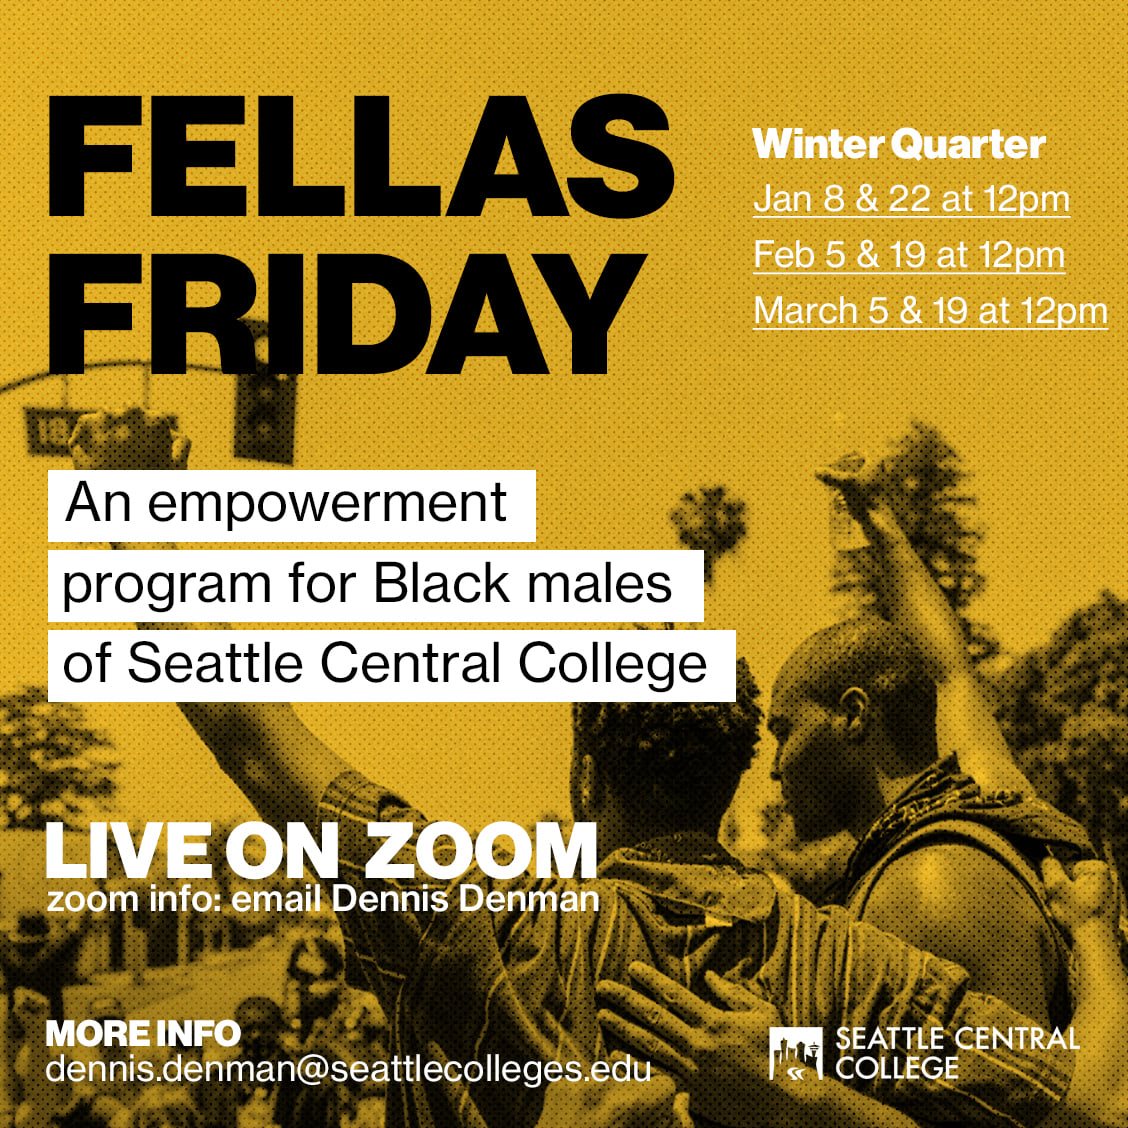 Fellas Friday event poster